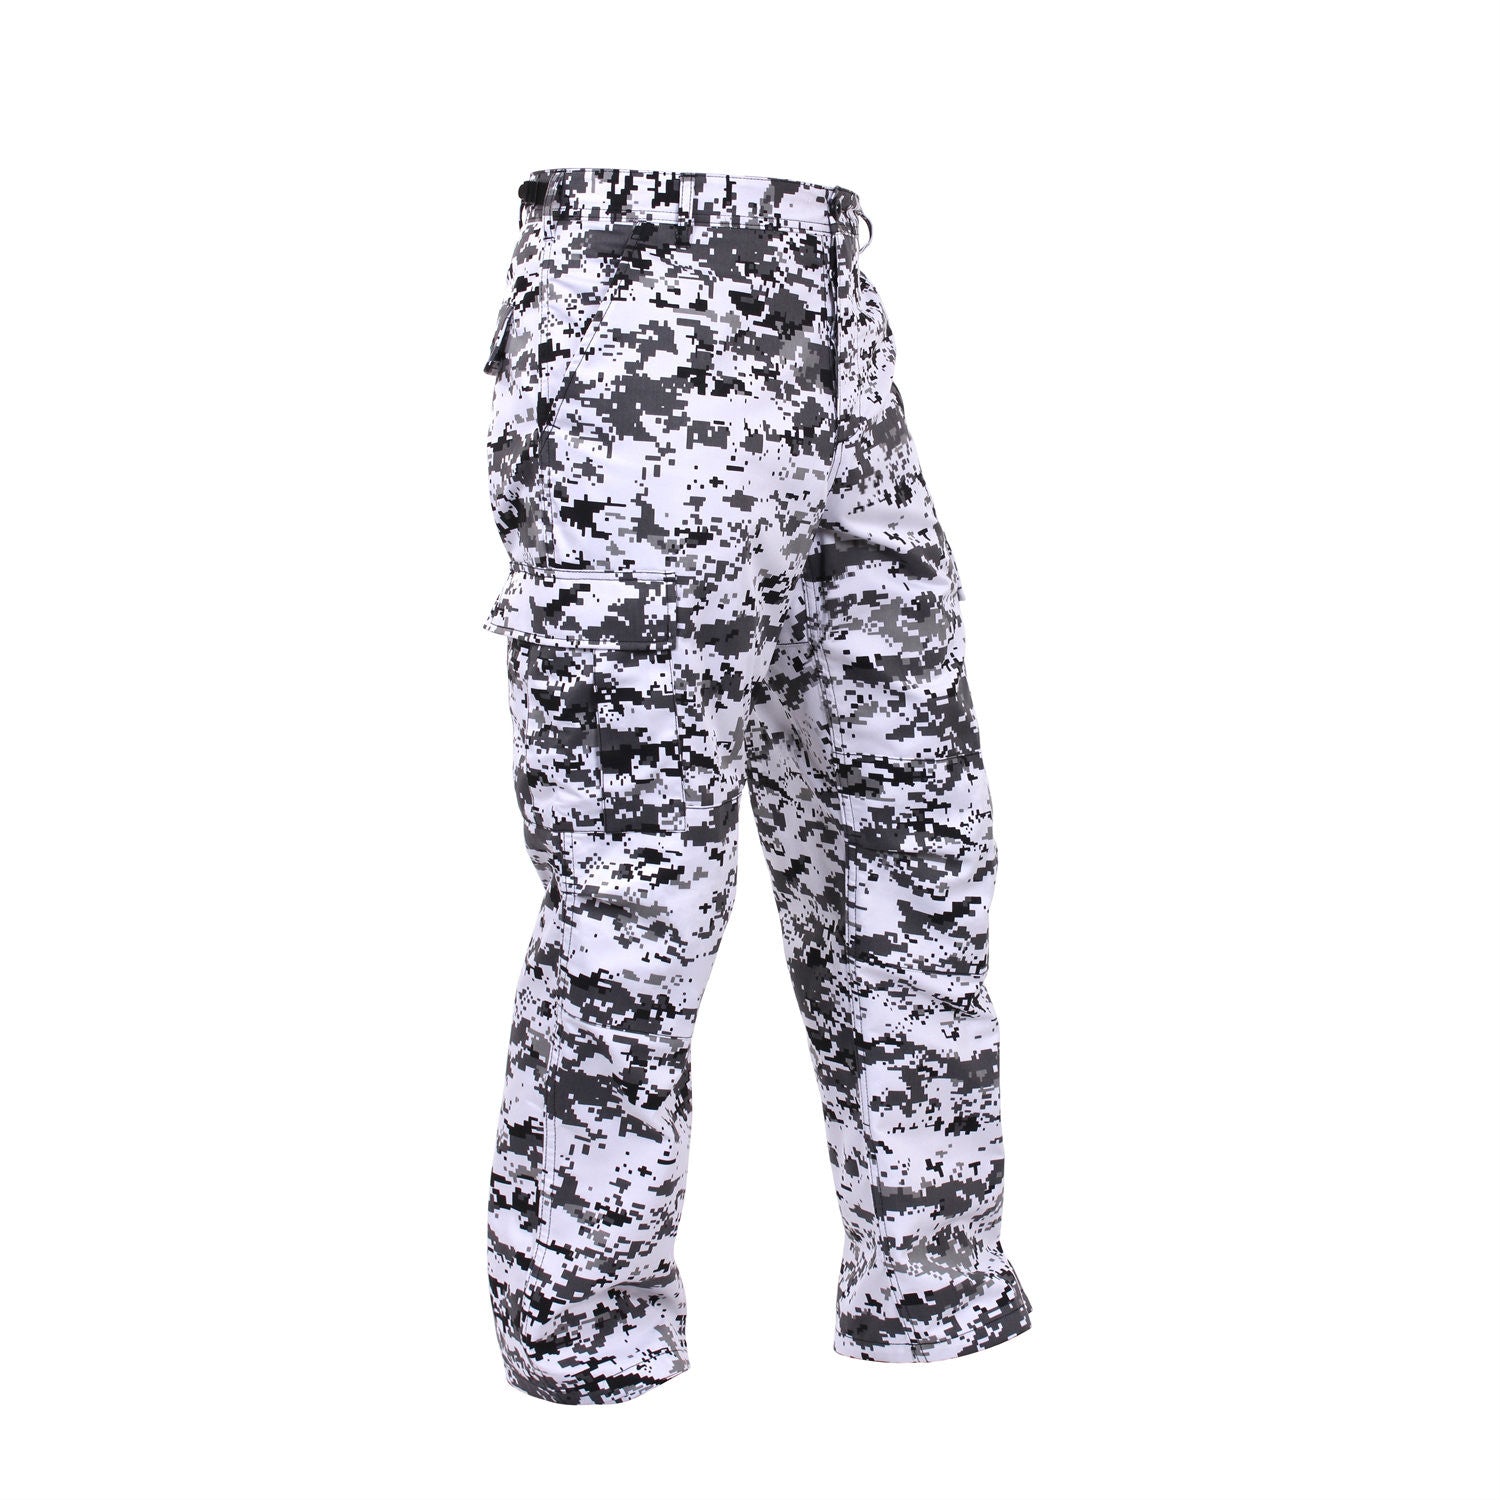 BDU Pants | Tactical Pants For Men | City Digital Camouflage